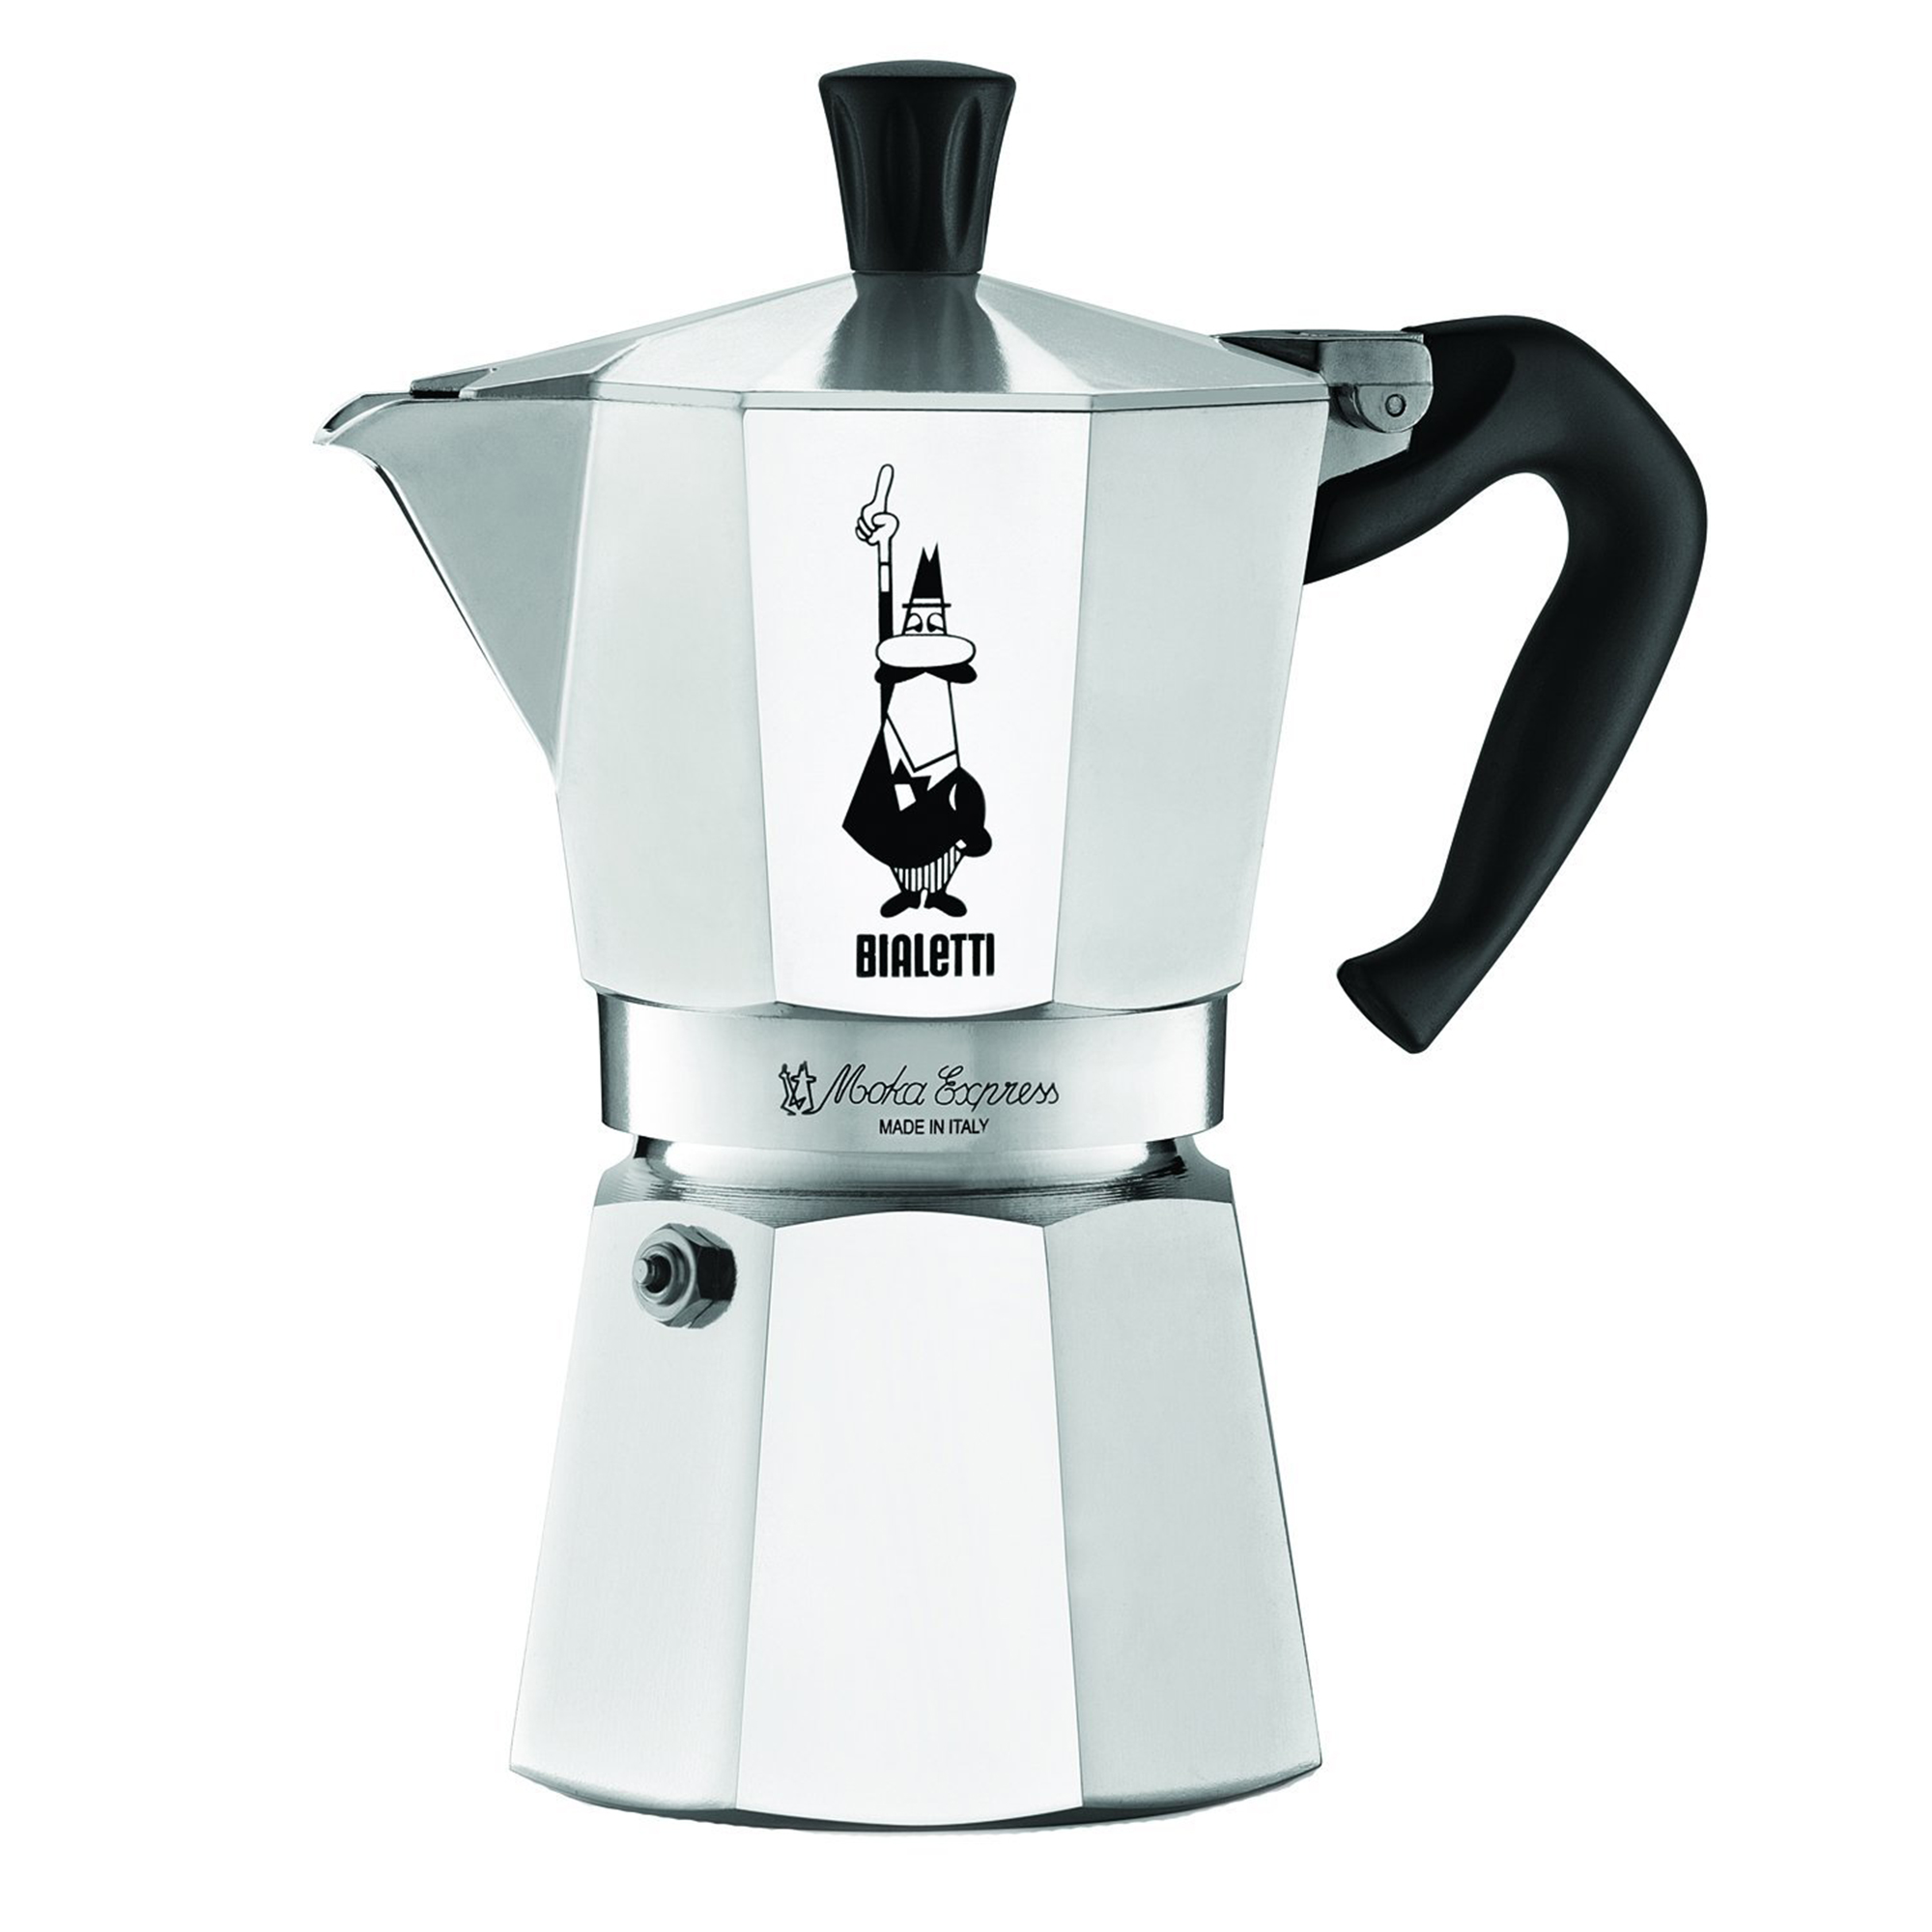 US1925_coffee-machines_moka-pot_bialetti-express-6-cup_illy-shop_2000x2000.jpg